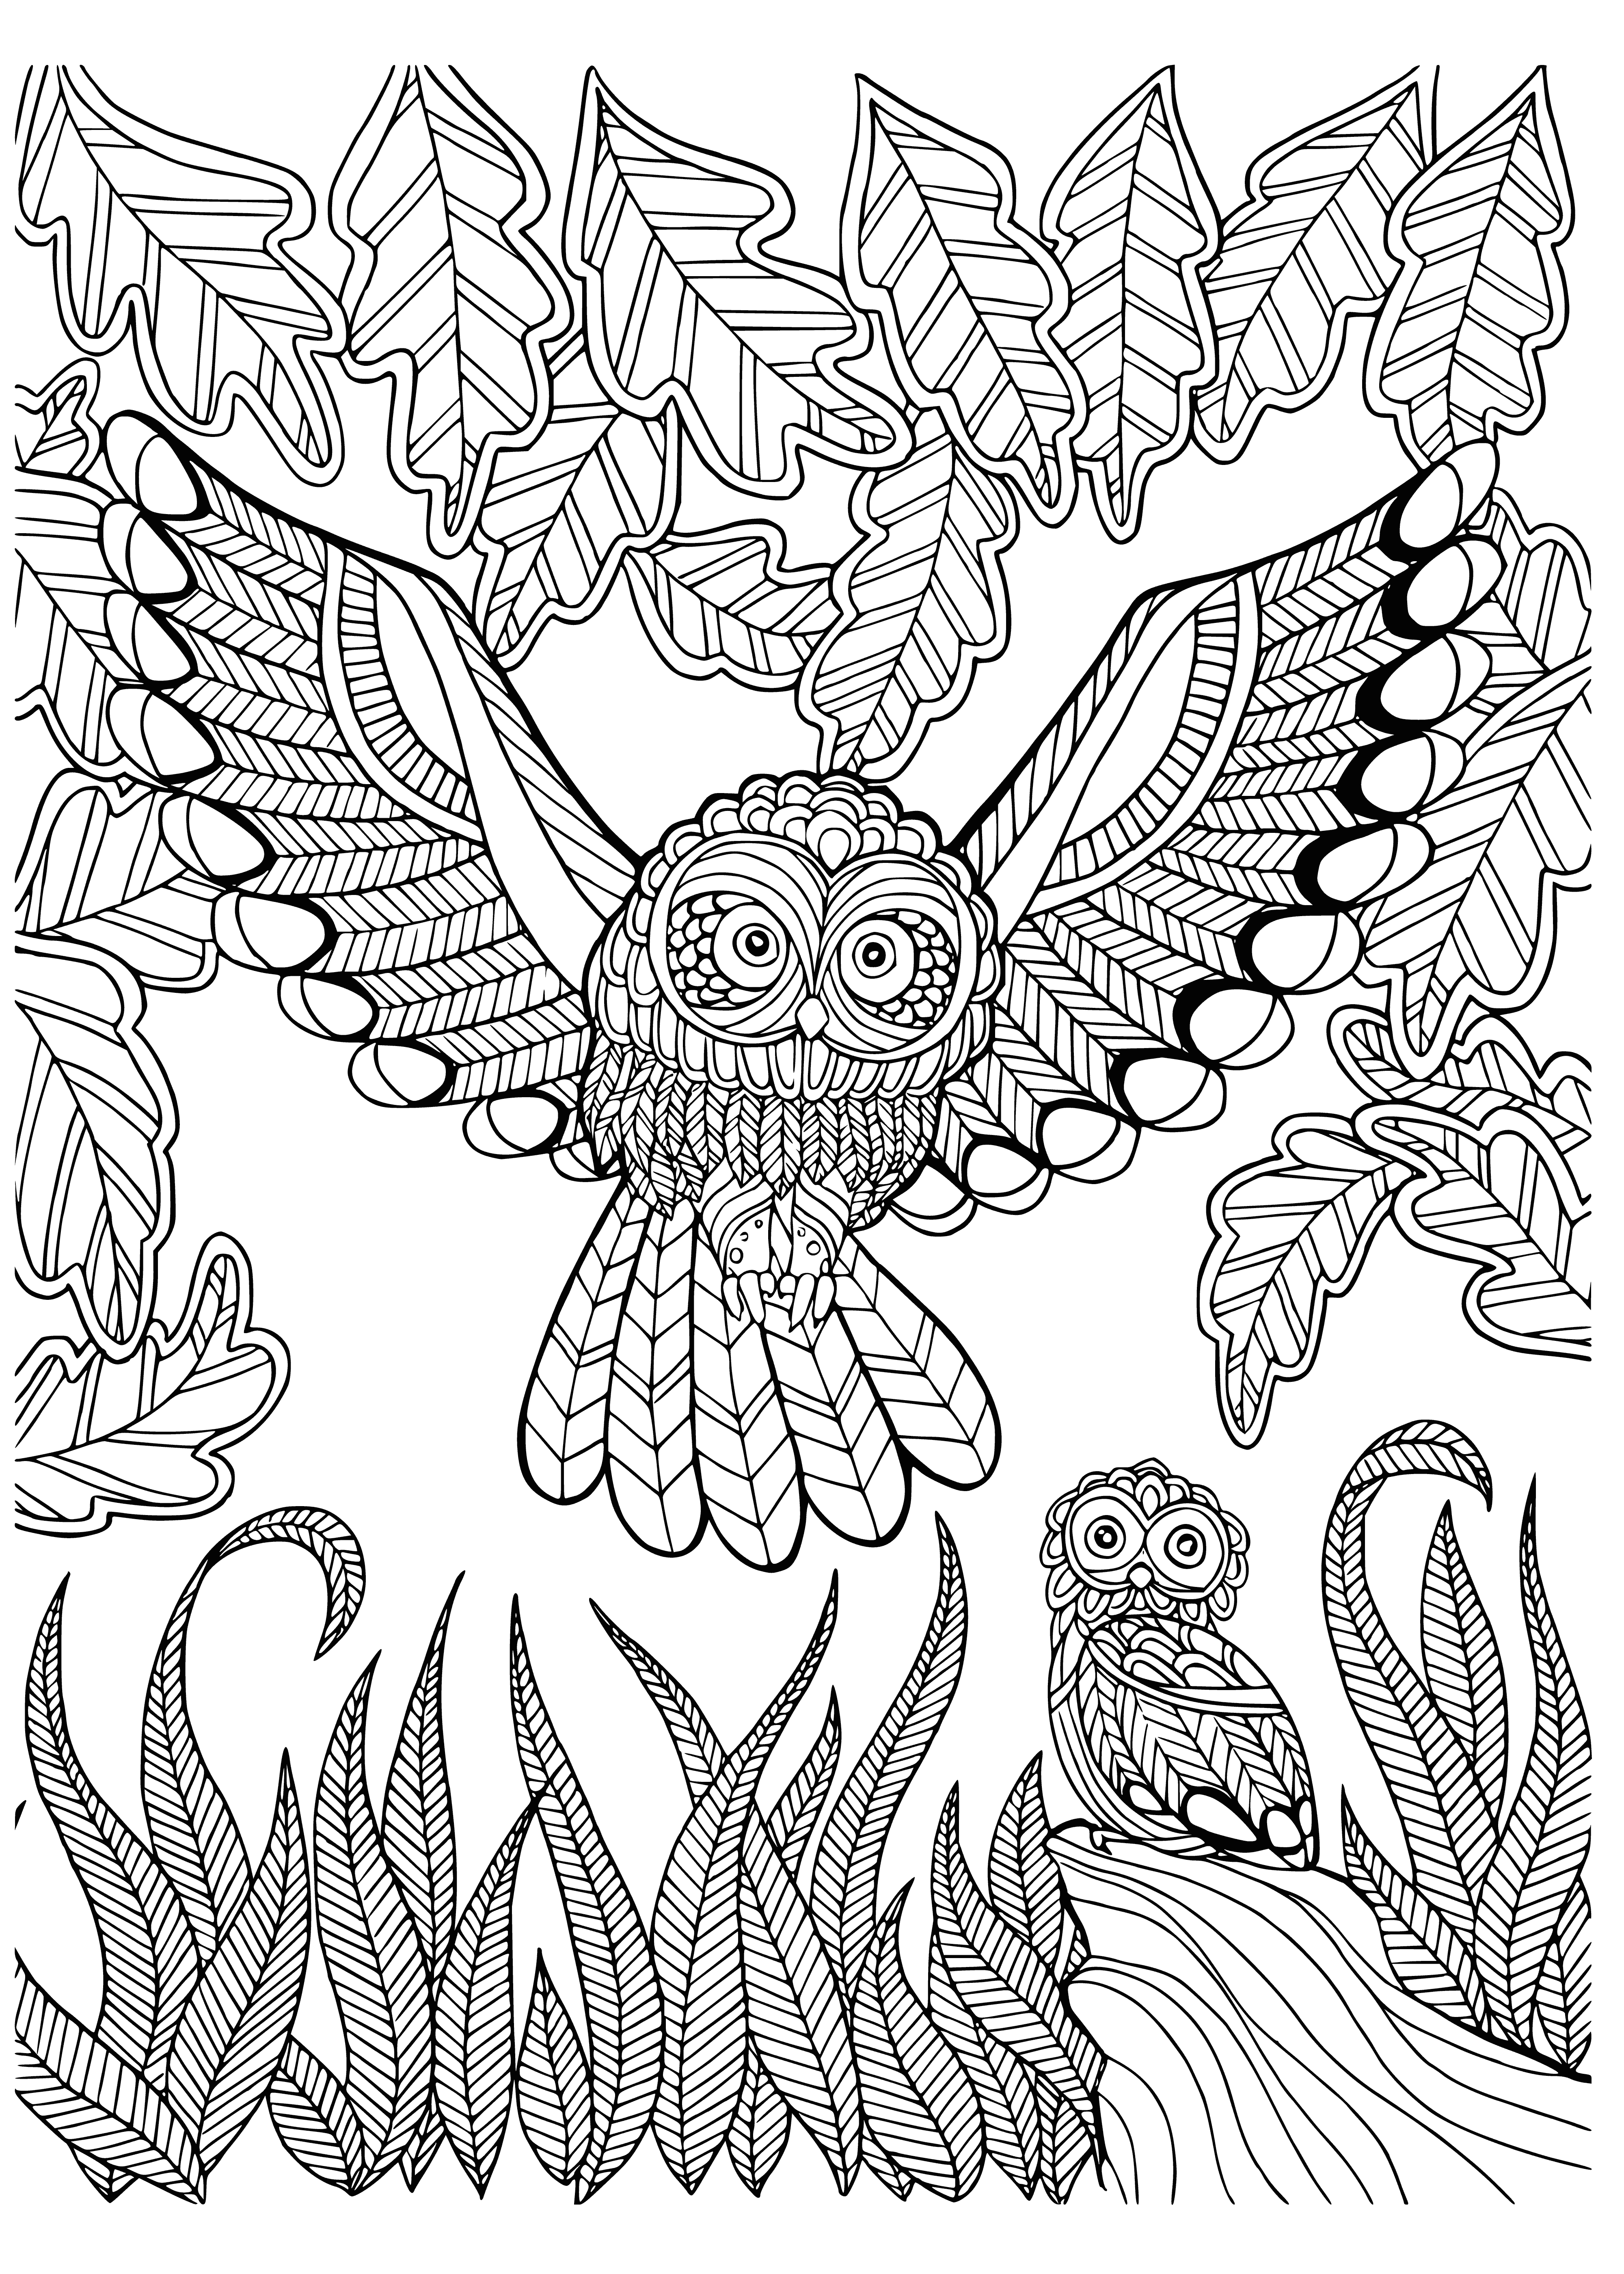 Coruja e corujinha na floresta página para colorir